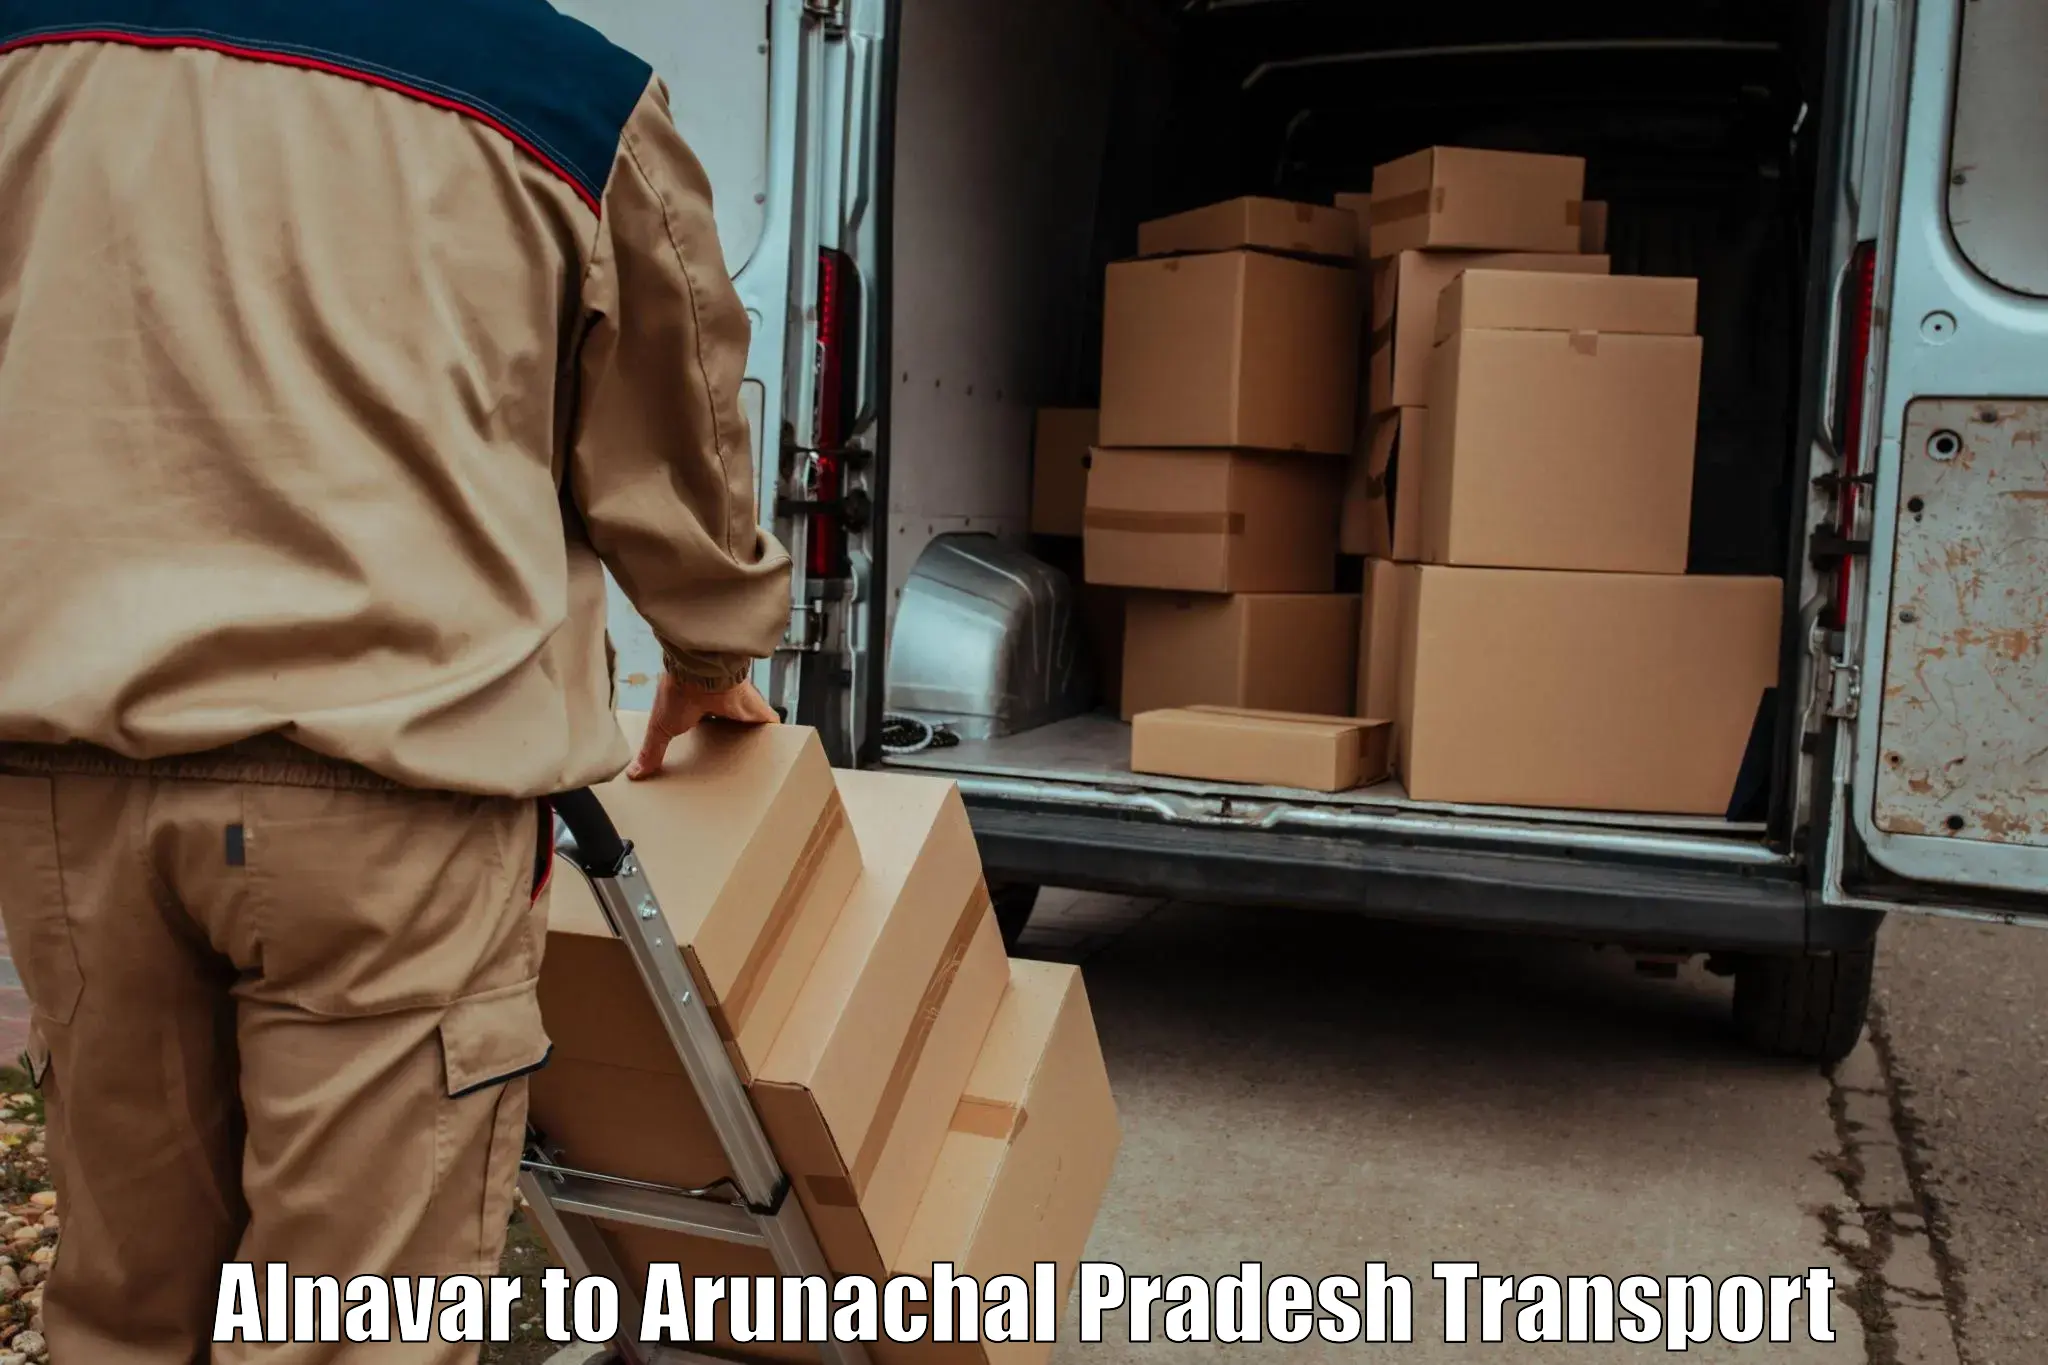 Truck transport companies in India Alnavar to Ziro